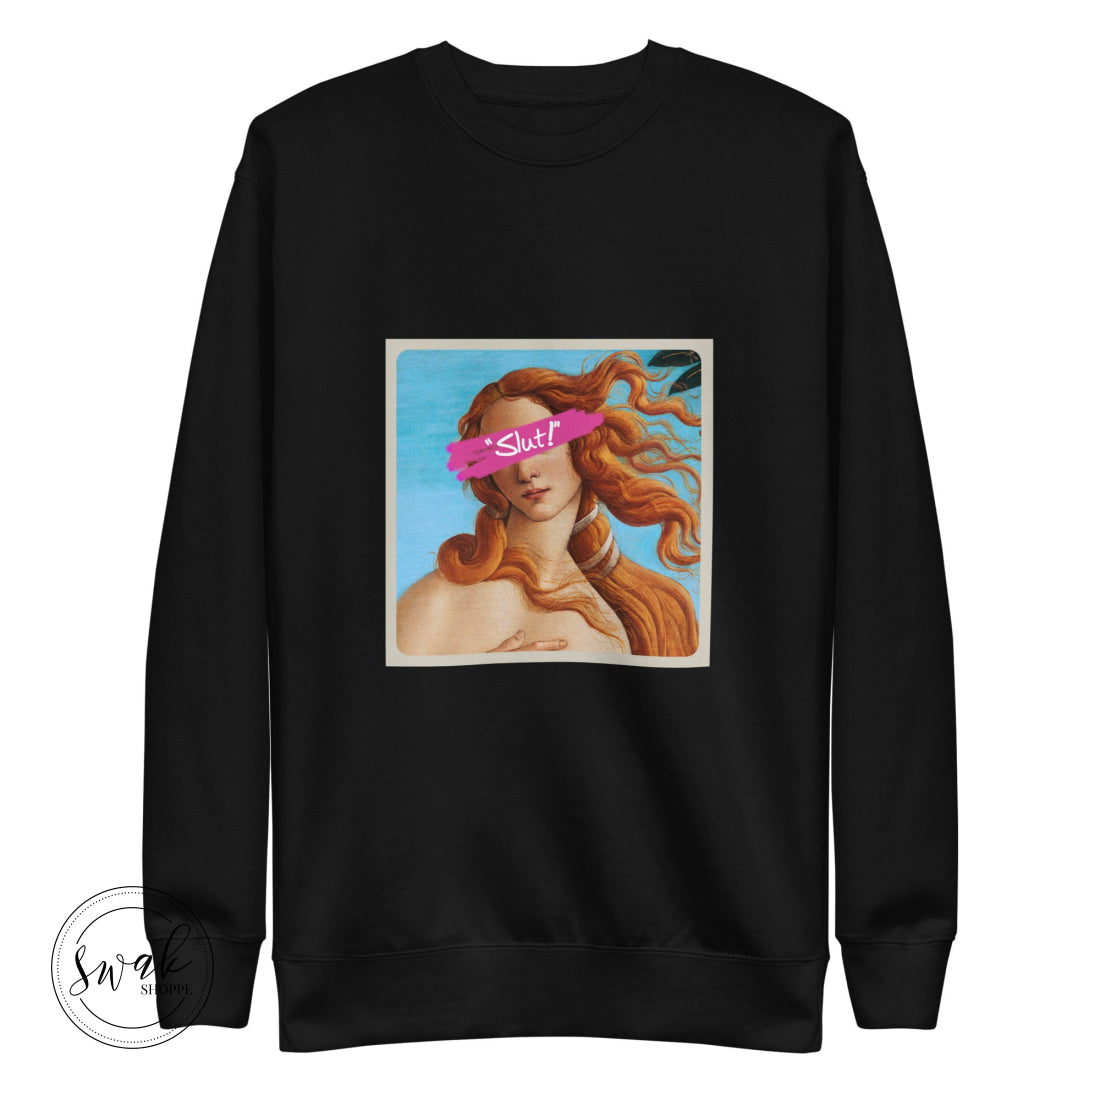 Slut! Birth Of Venus Unisex Fashion Sweatshirt Black / S